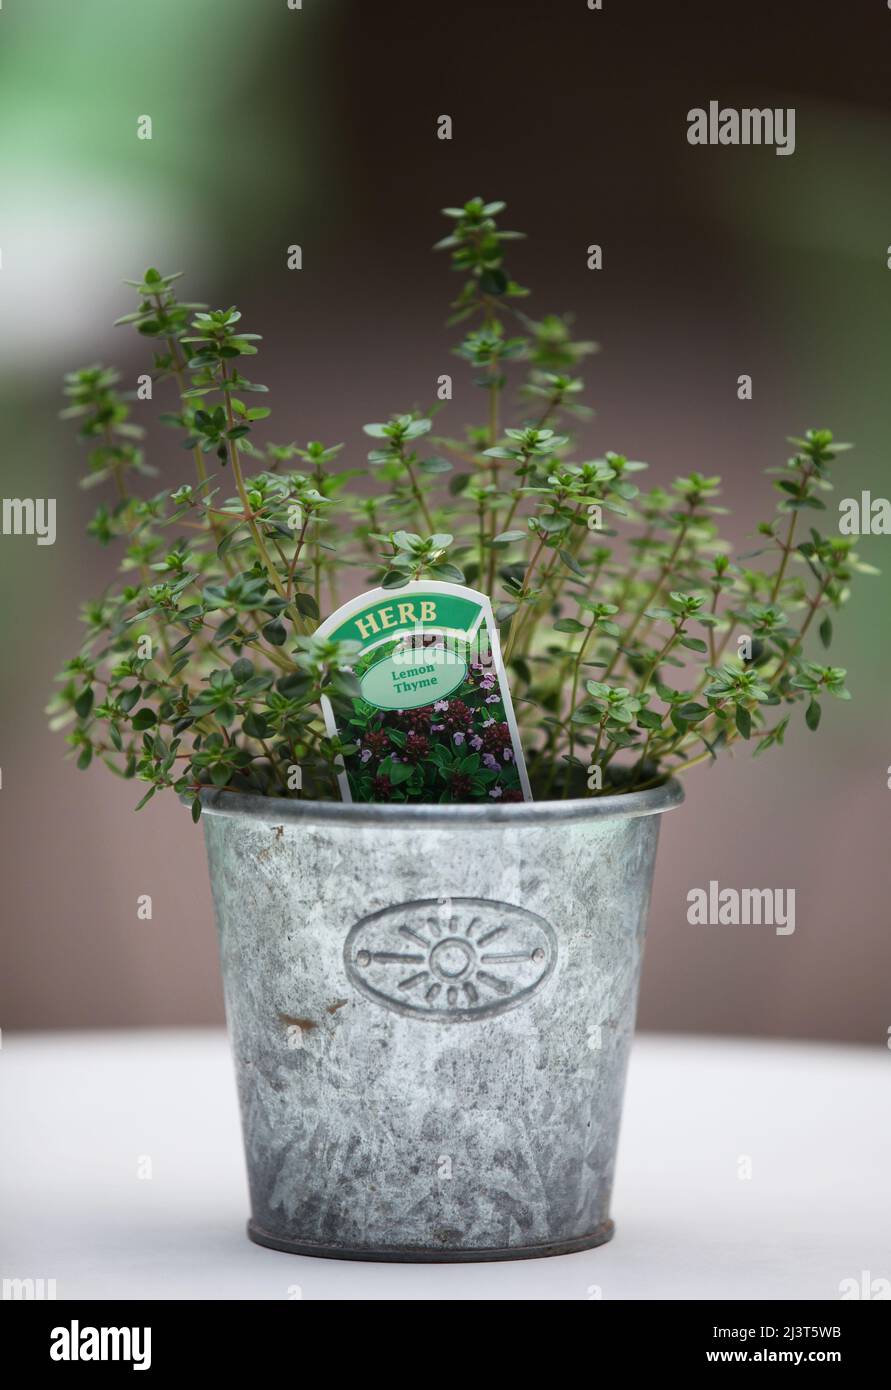 herb, Lemon Thyme, in small metal pot Stock Photo